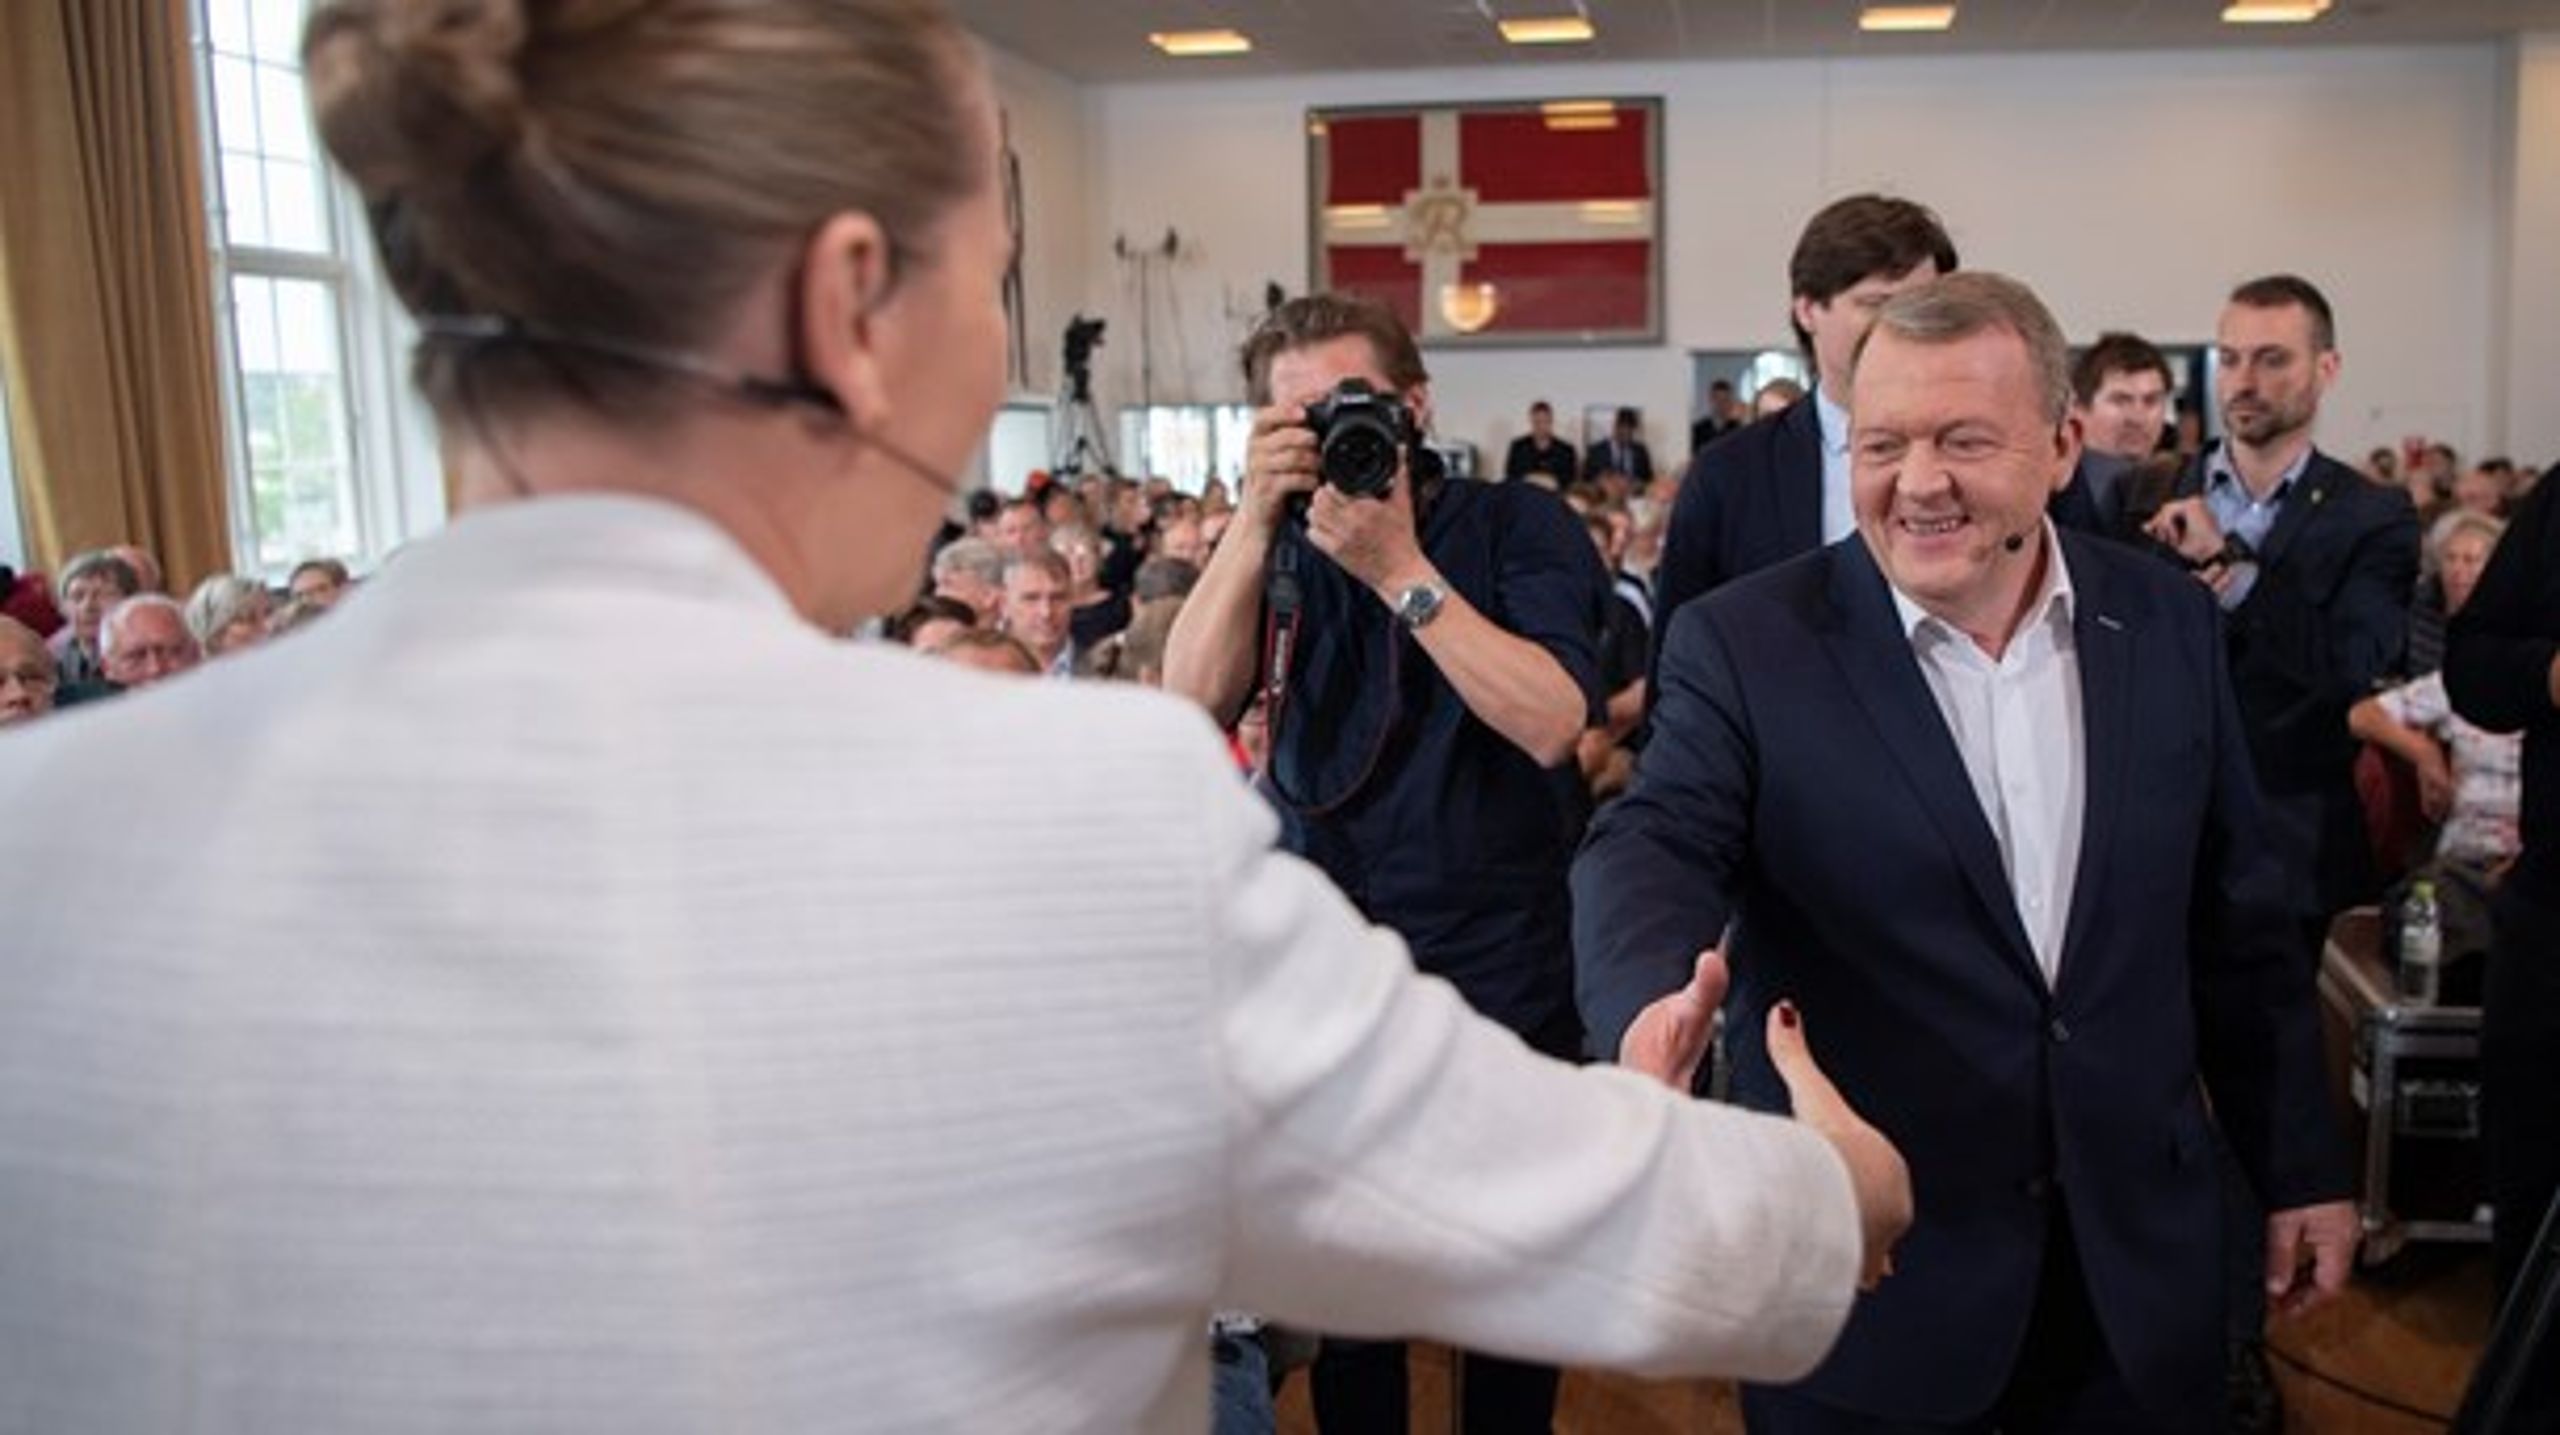 Regeringens dyre sundhedsreform blev ikke startskuddet på en valgkamp, hvor Lars Løkke Rasmussens evner som reformsnedker stjal rampelyset, skriver tre debattører.